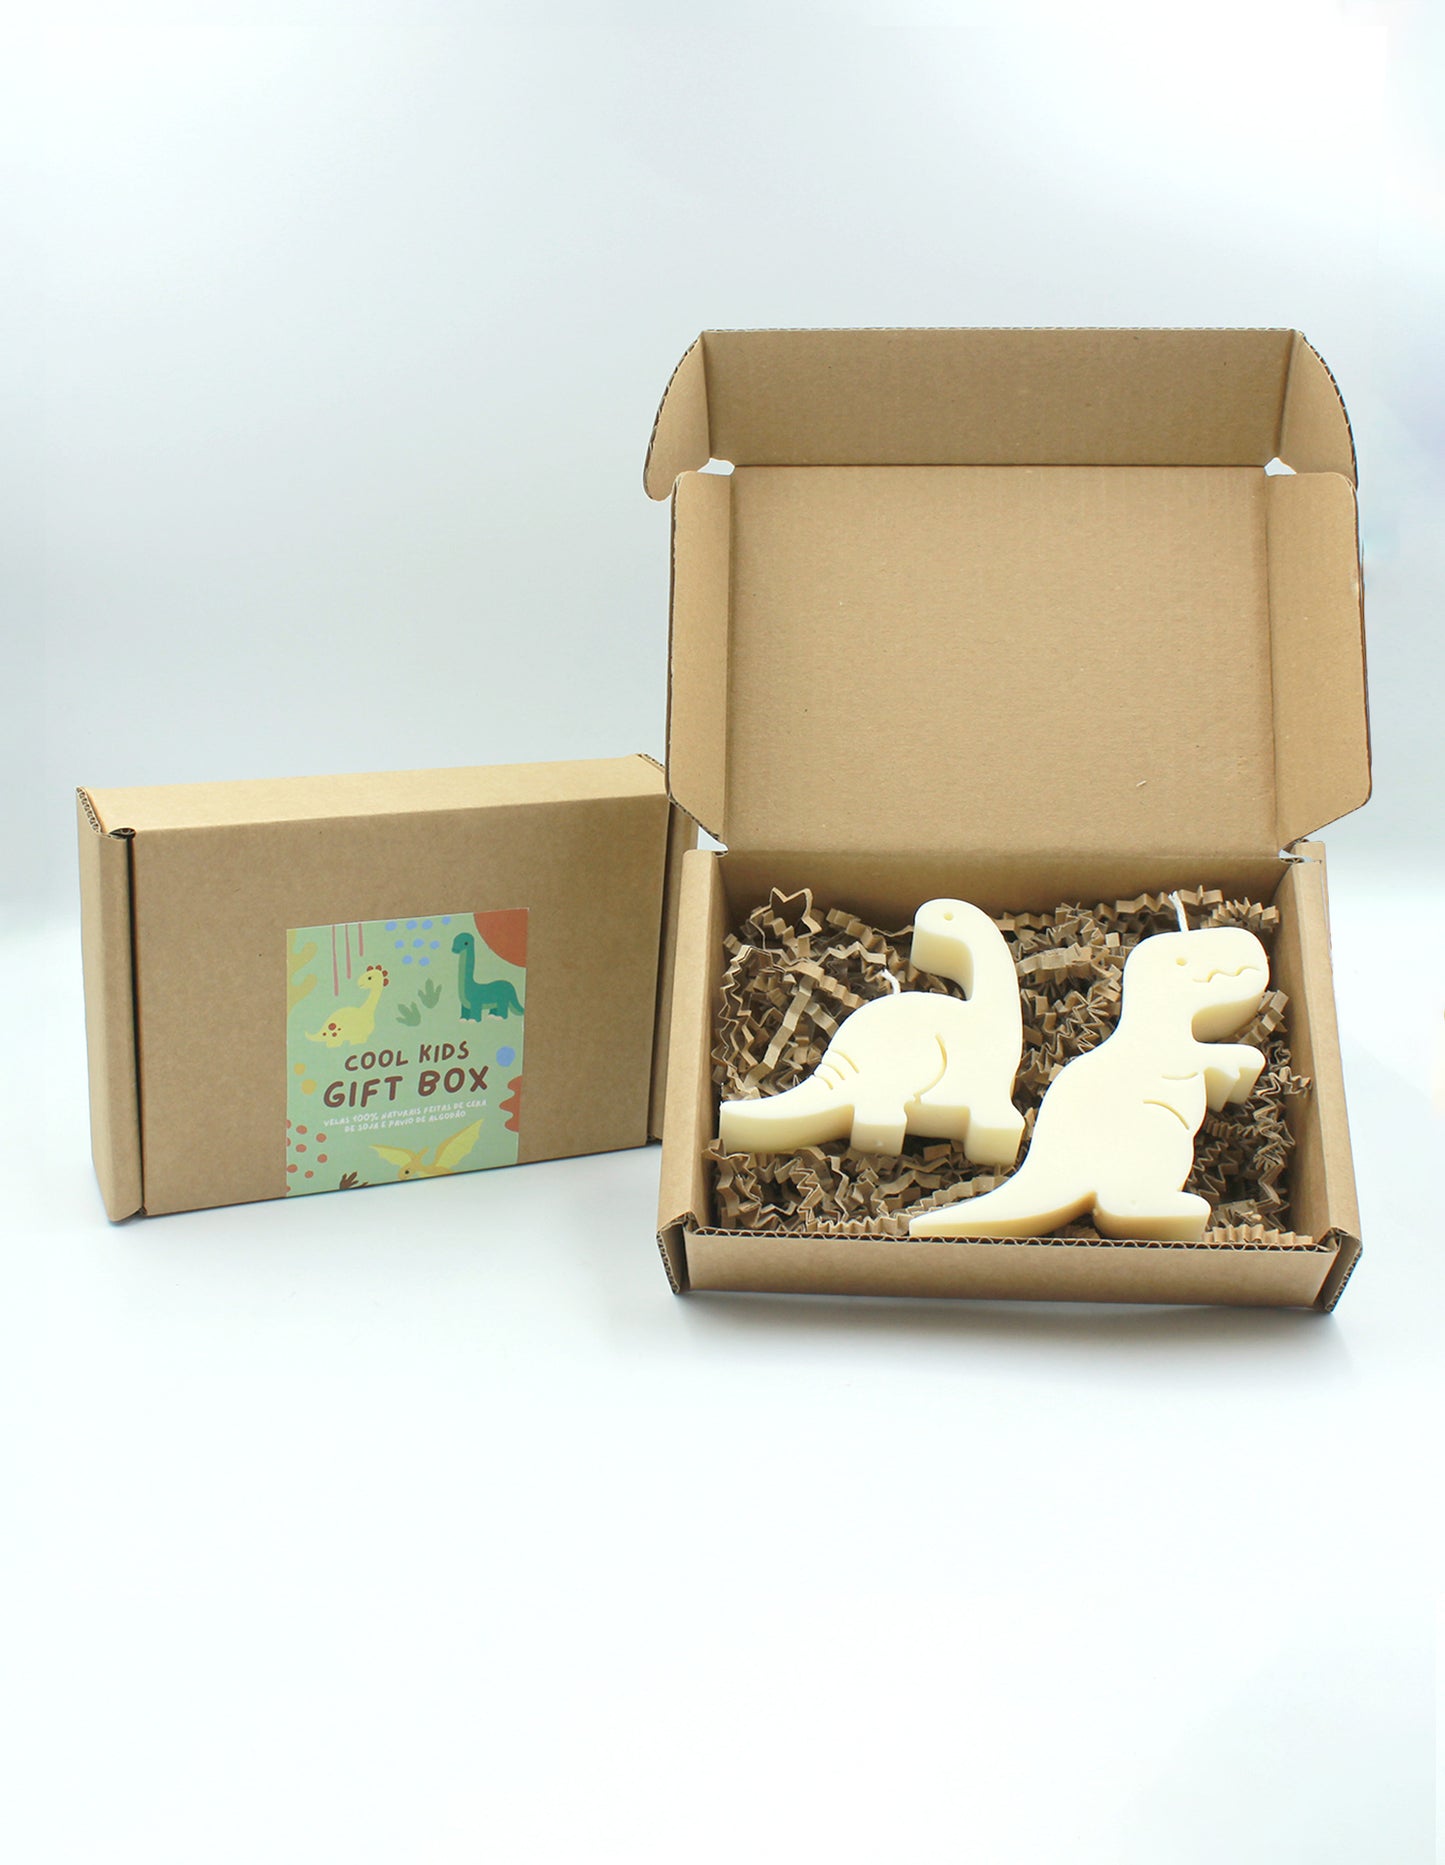 Cool Kids Gift Box